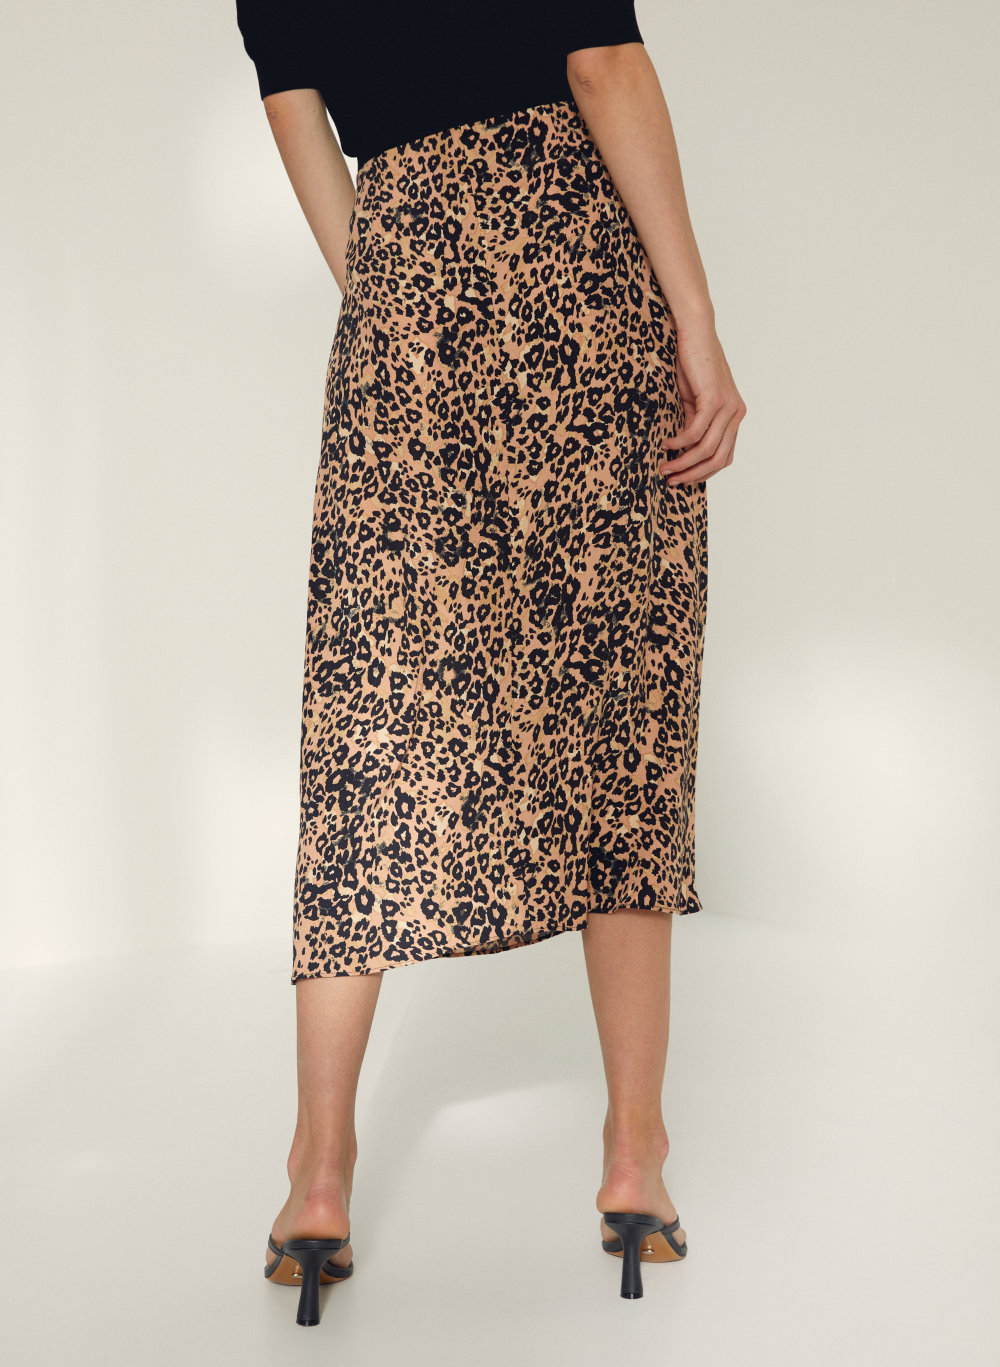 leopard mini skirt qvc,yasserchemicals.com